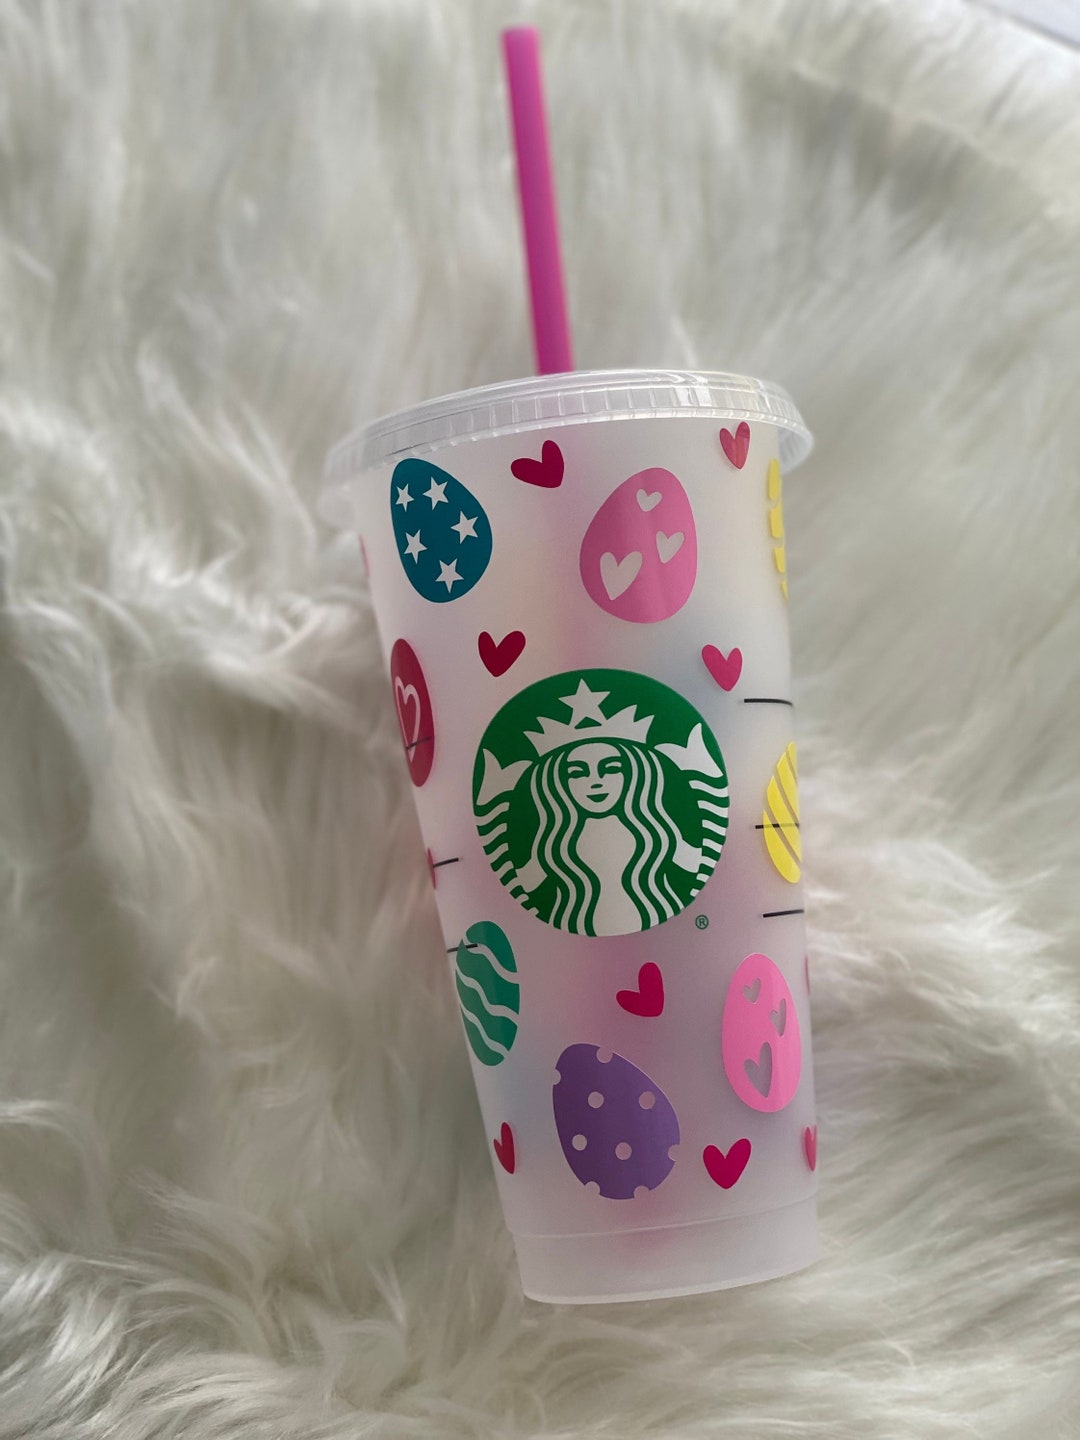 Starbucks Reusable Cold Cup 2 Lot 24oz Venti Plastic With Lids & Straws